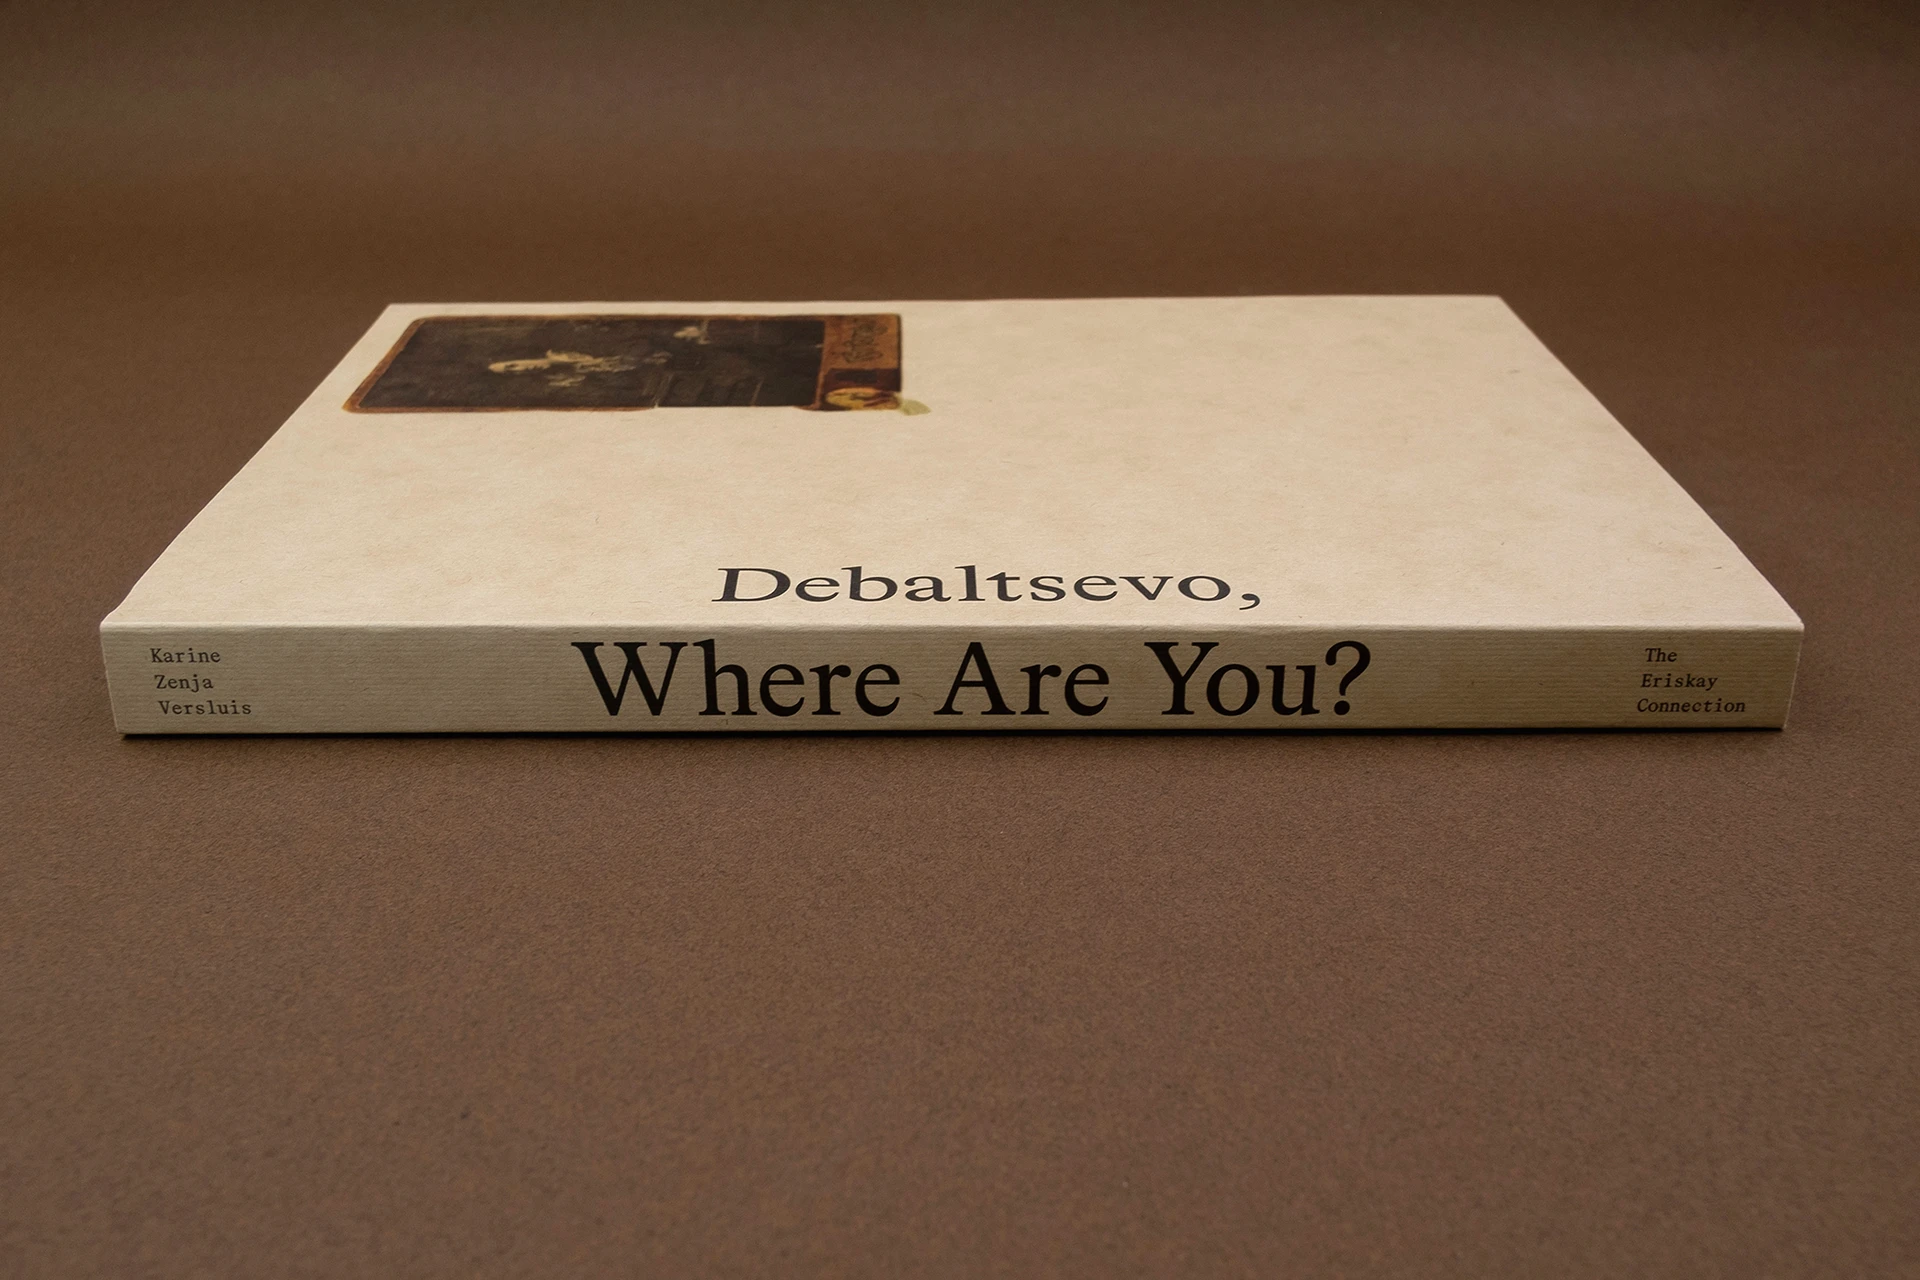 Debaltsevo, Where Are You? - The Eriskay Connection